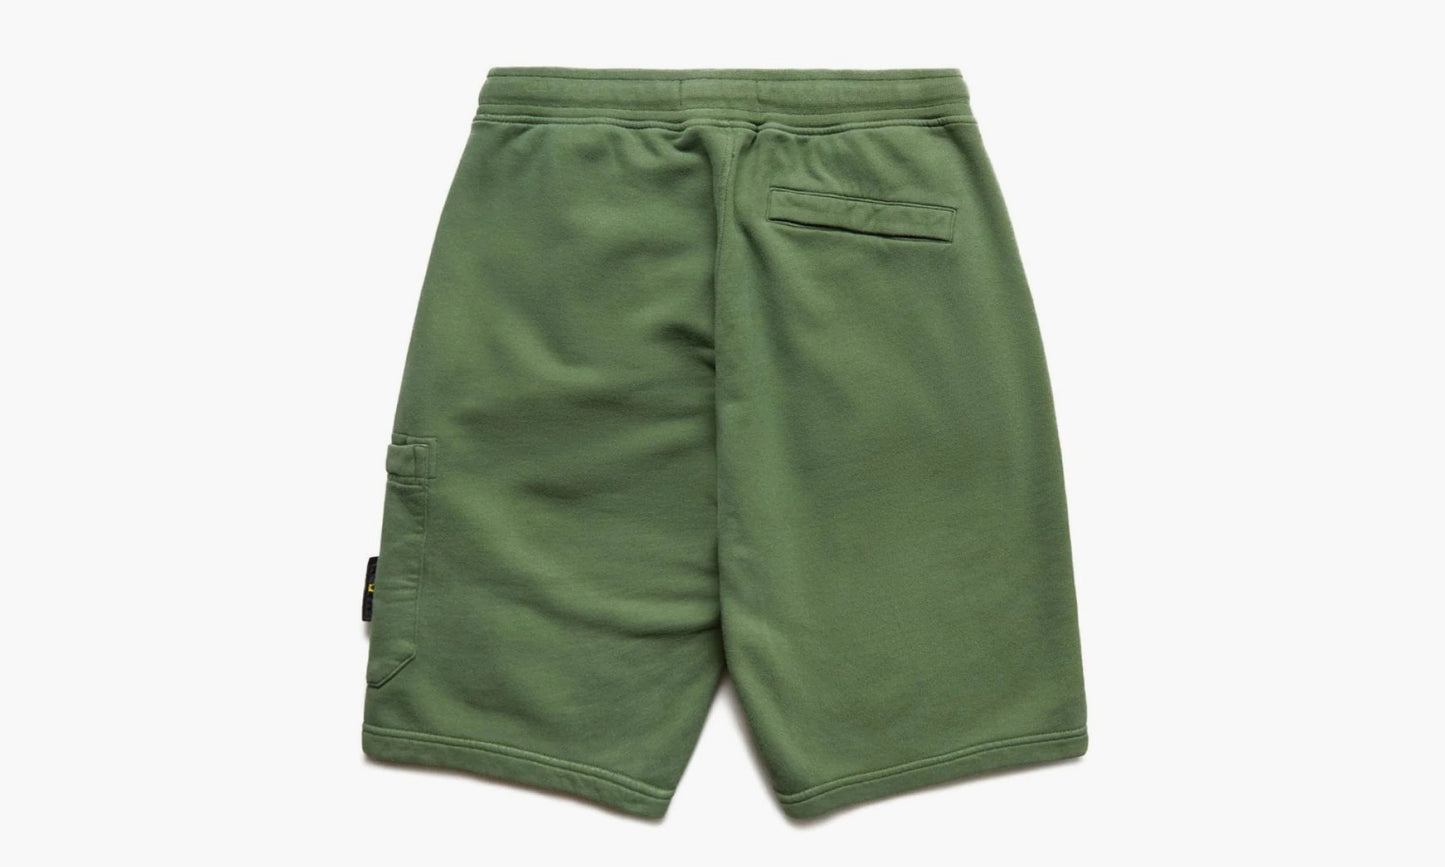 Stone Island Bermuda Shorts “Military Green” - 771564620 - V0058 | Grailshop